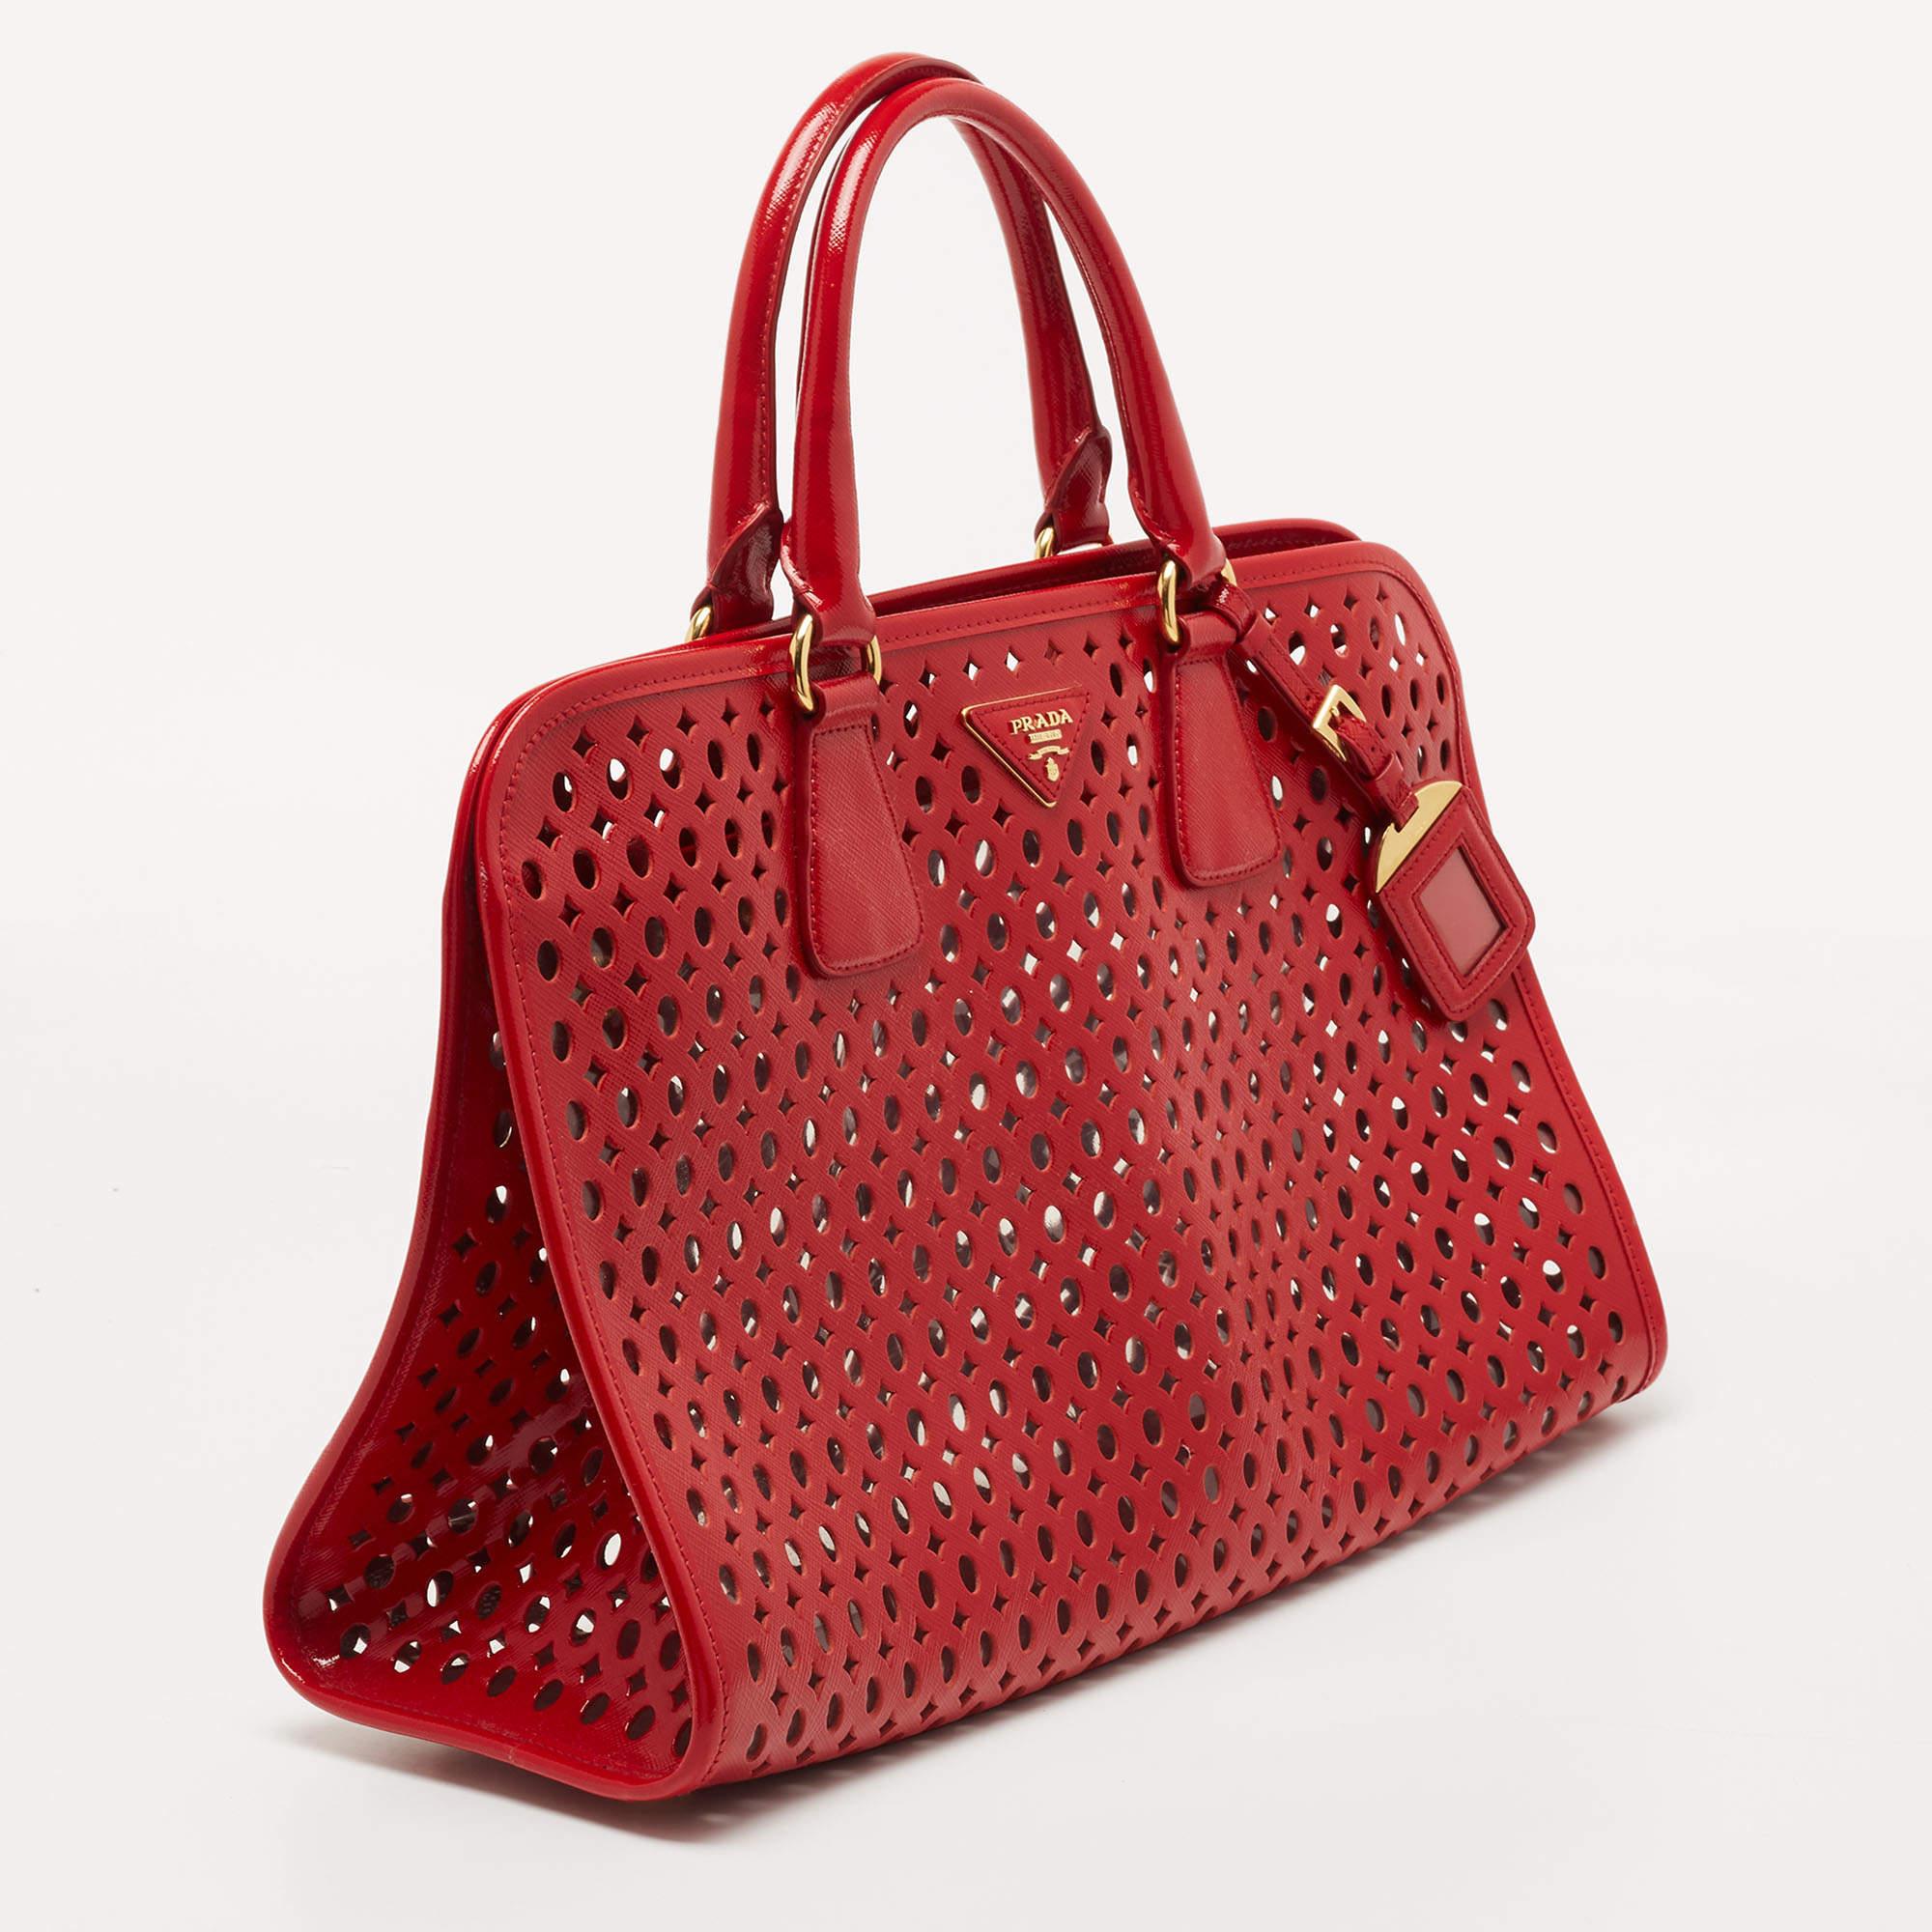 Women's Prada Red Laser Cut Leather Fori Satchel